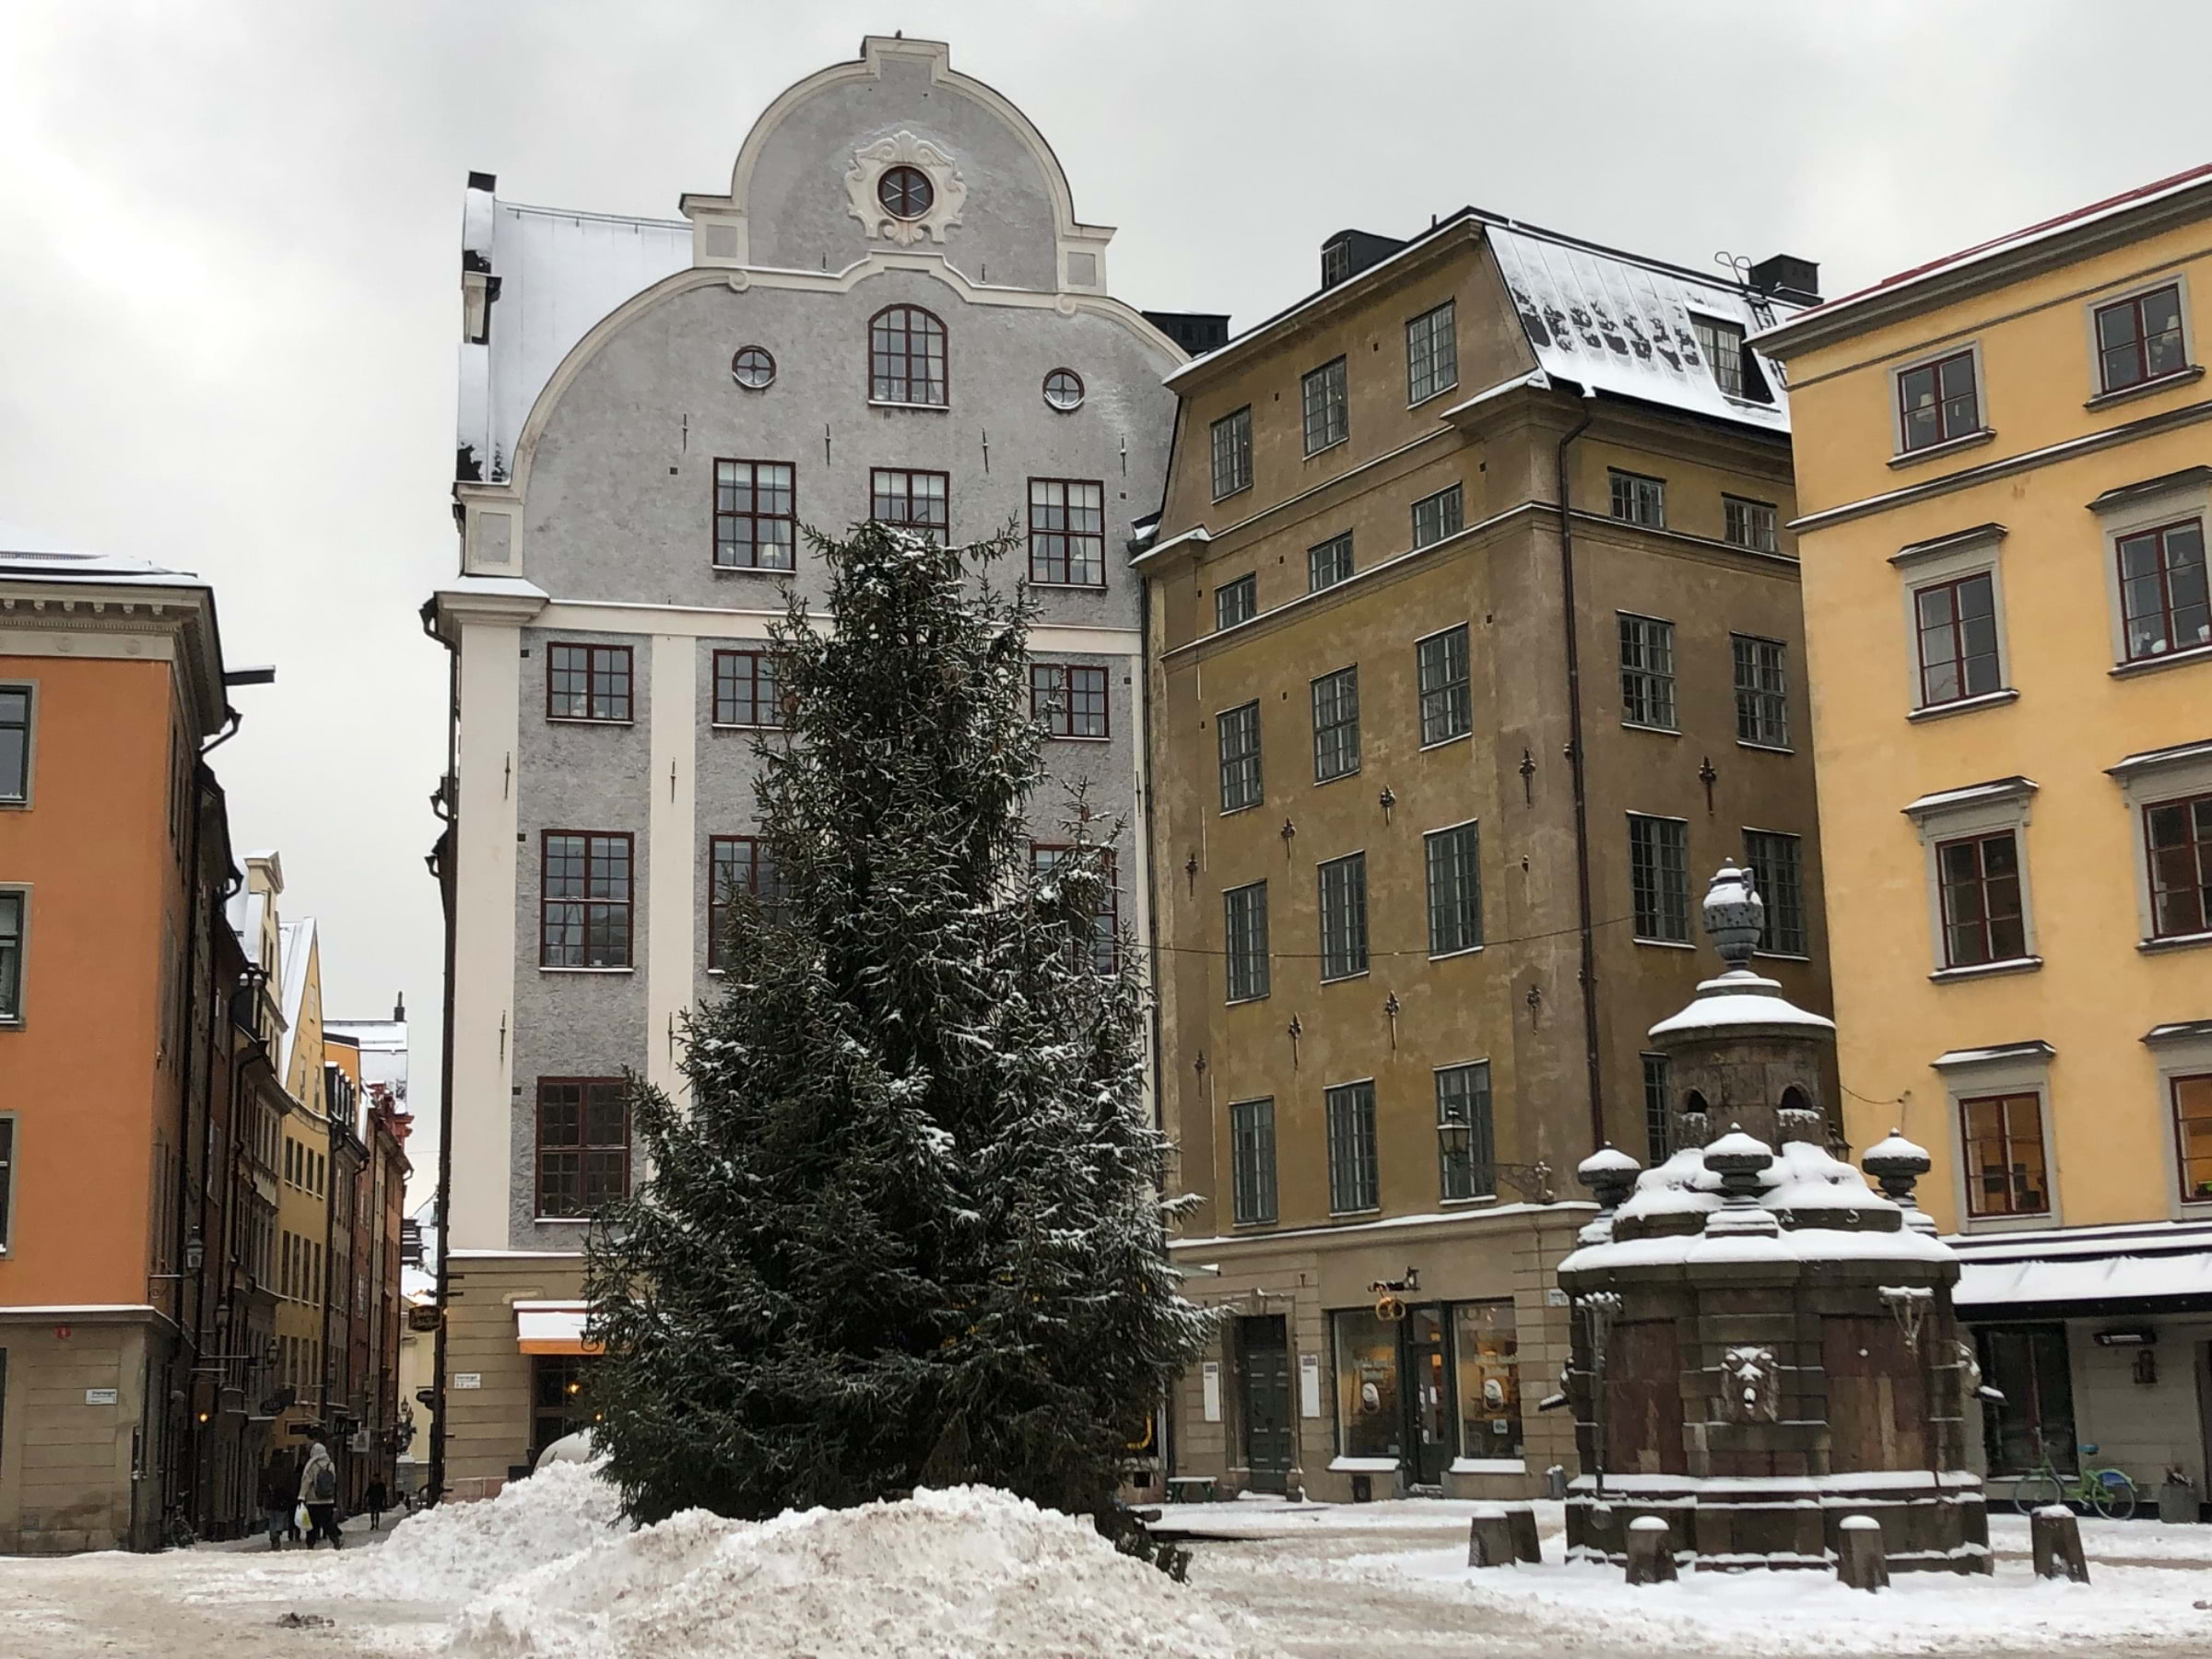 Grillska during winter – Photo from Grillska Huset by Jessica G. (25/07/2023)